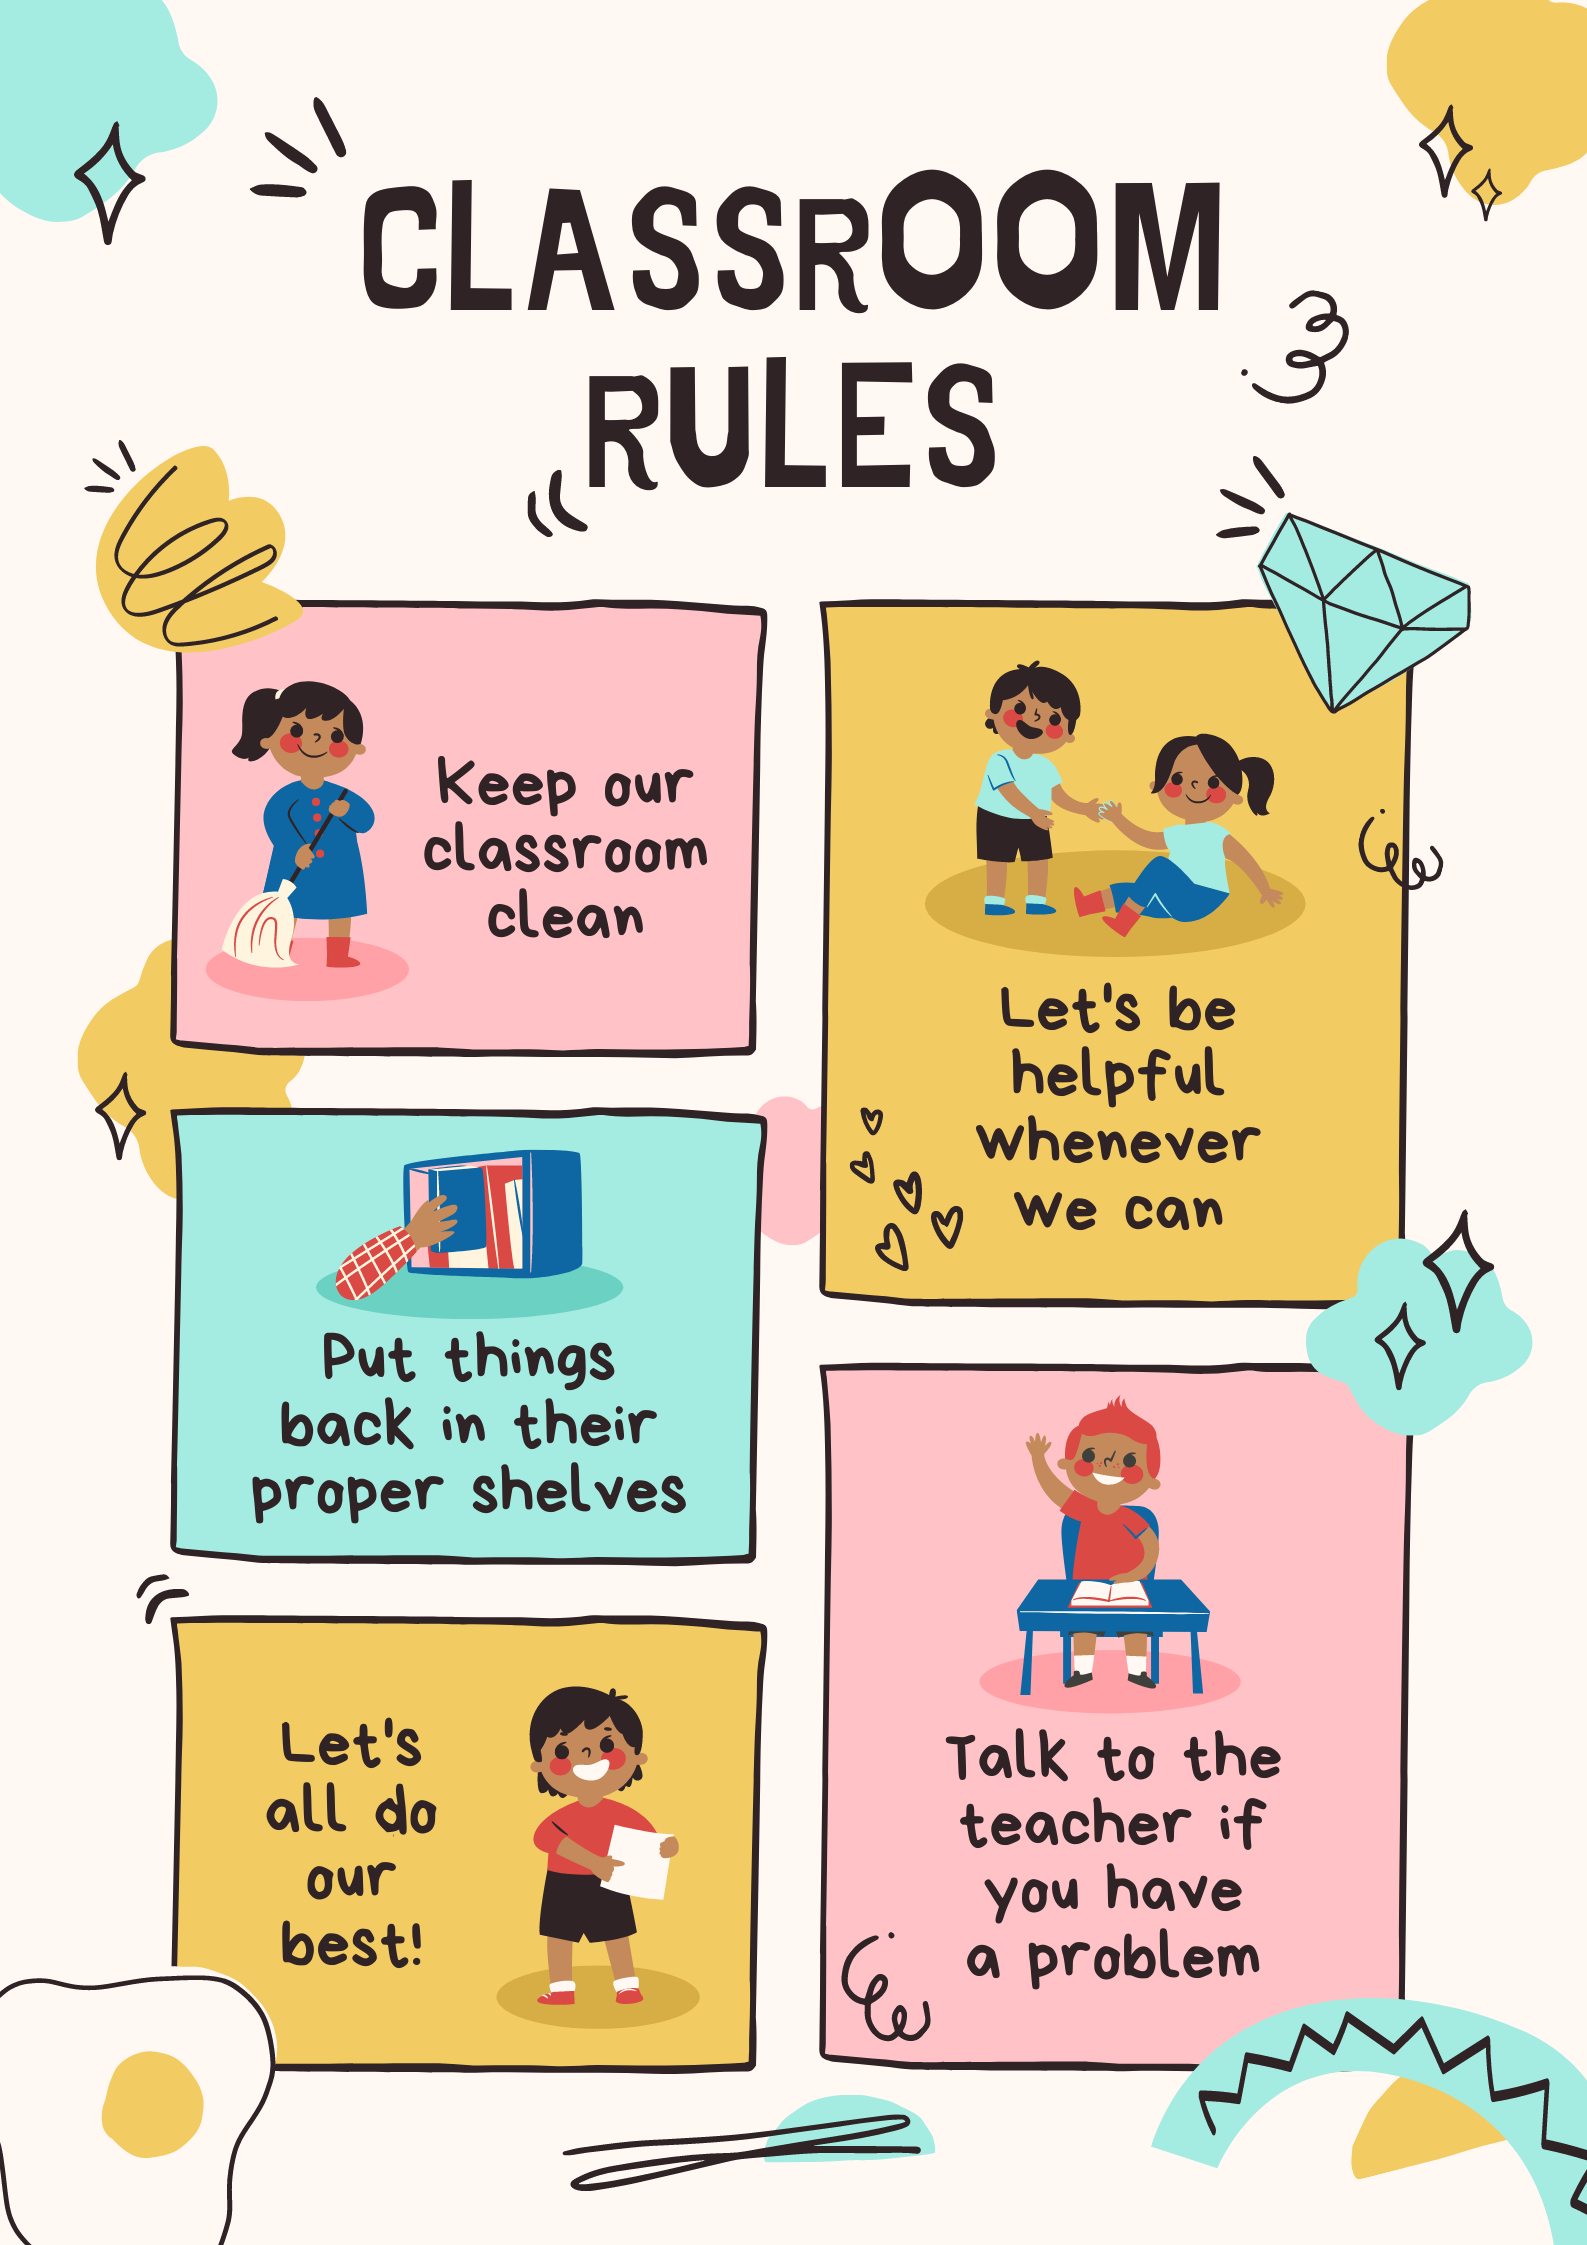 chalkboard-classroom-rules-poster-jack-potato